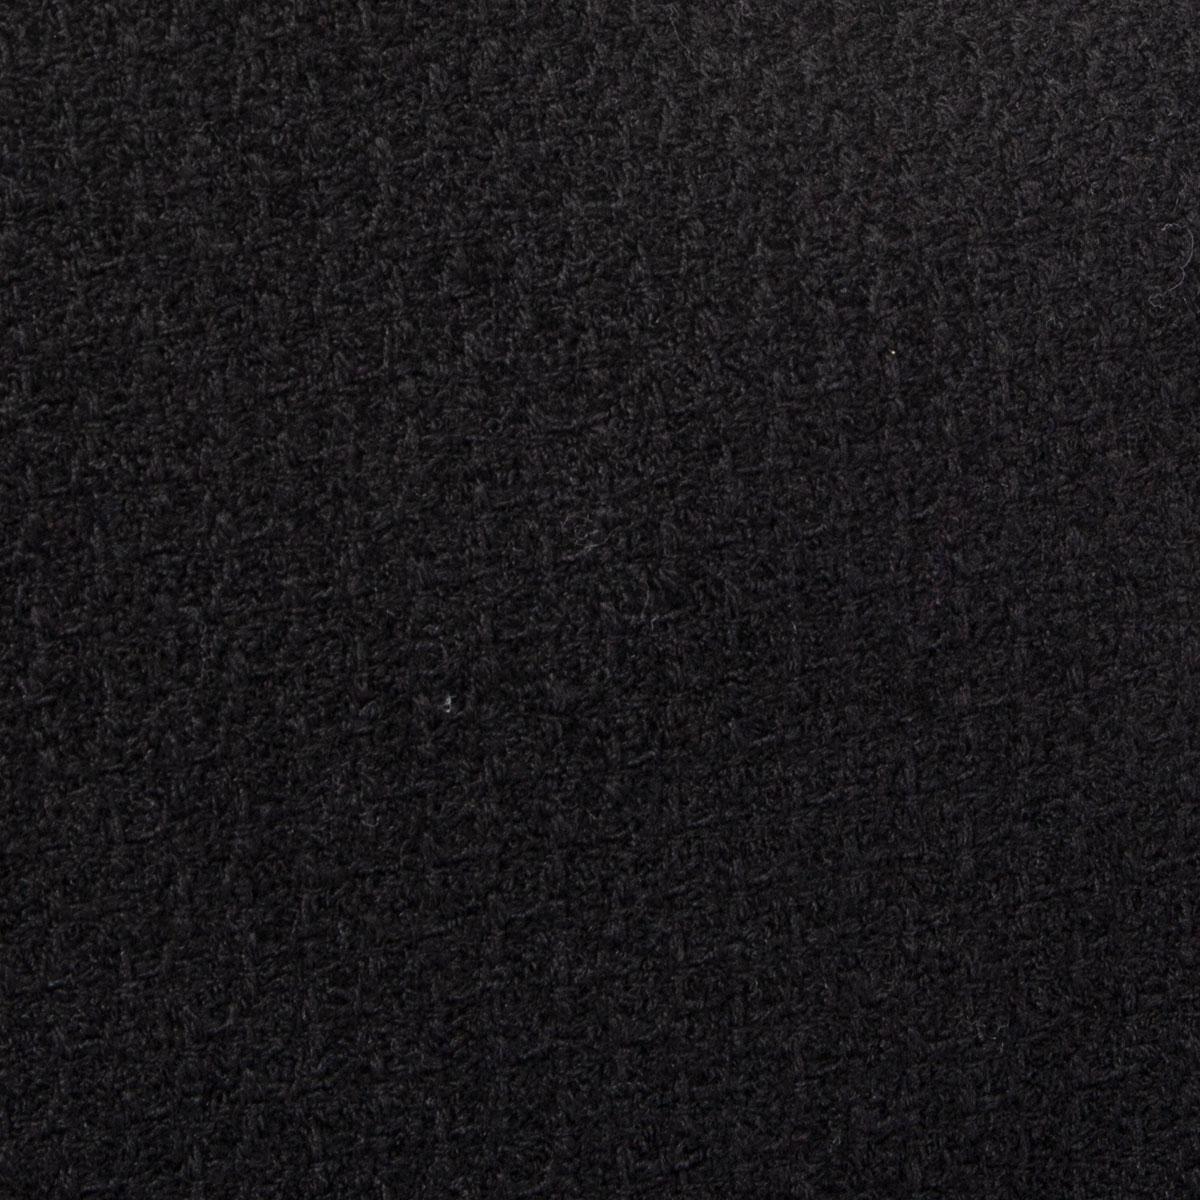 Women's CHANEL black wool blend PARIS SALZBURG Jacket 38 S